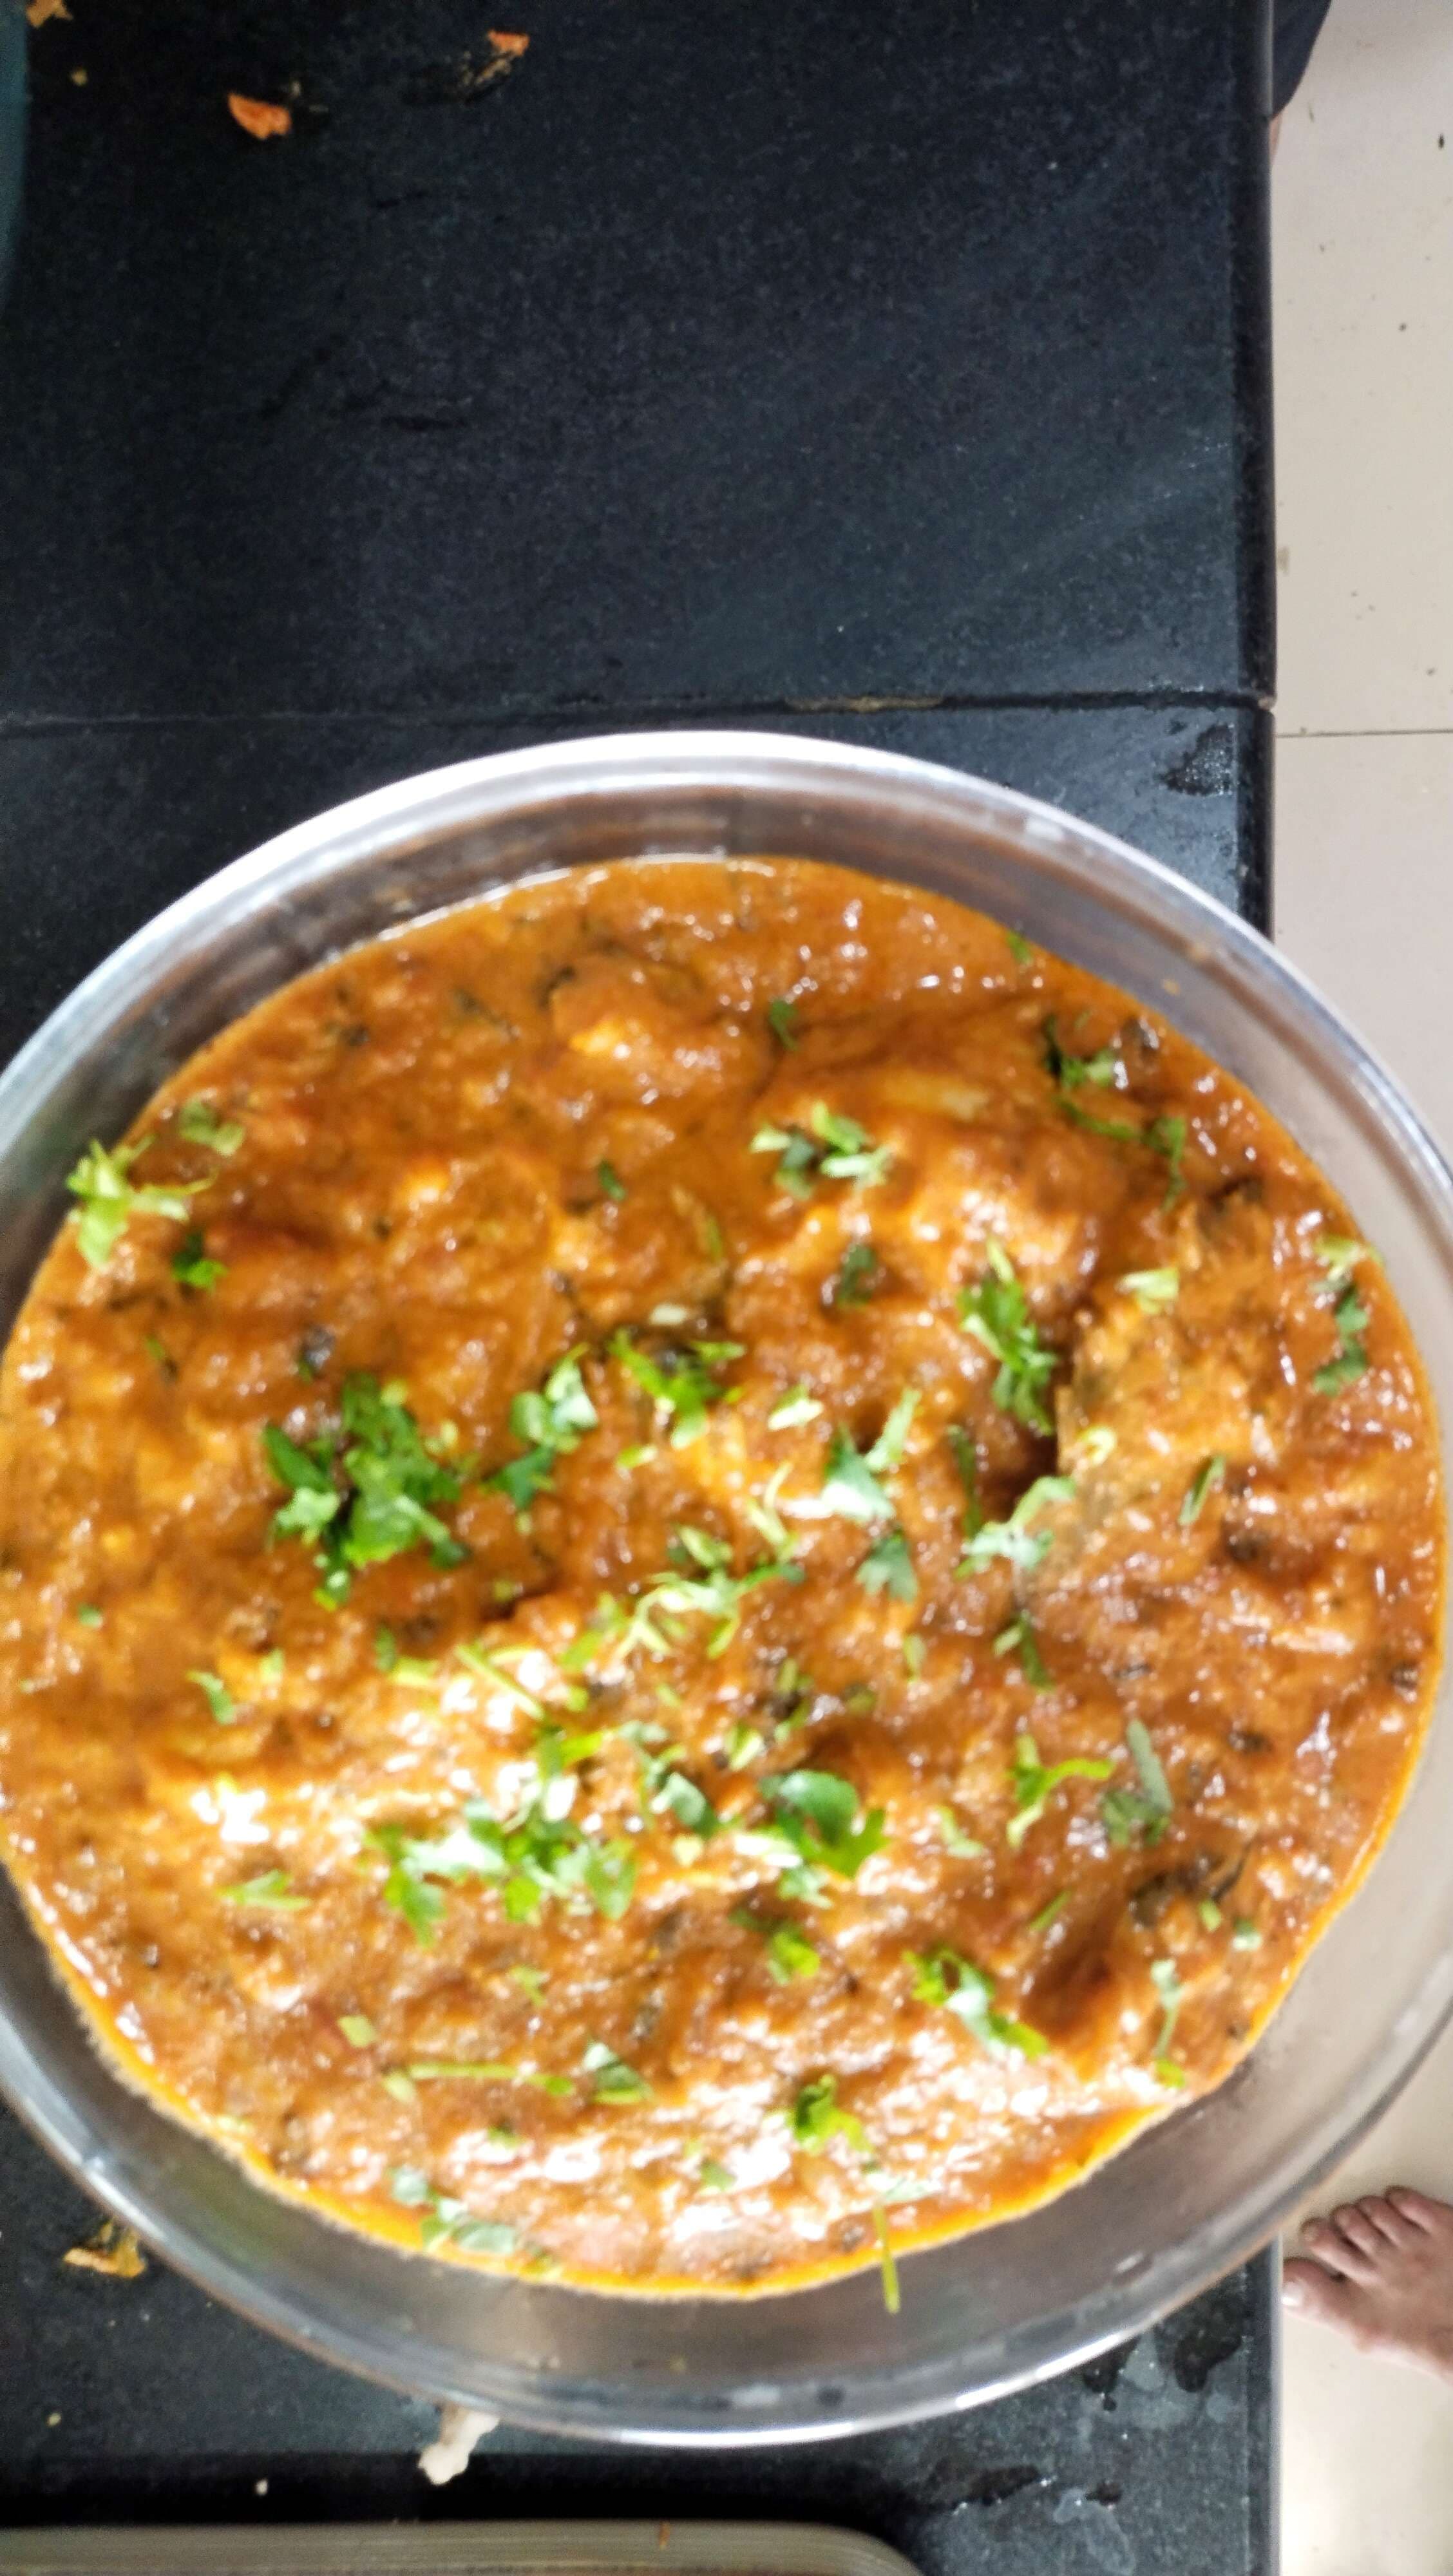 Delicious Rara Chicken prepared by COOX